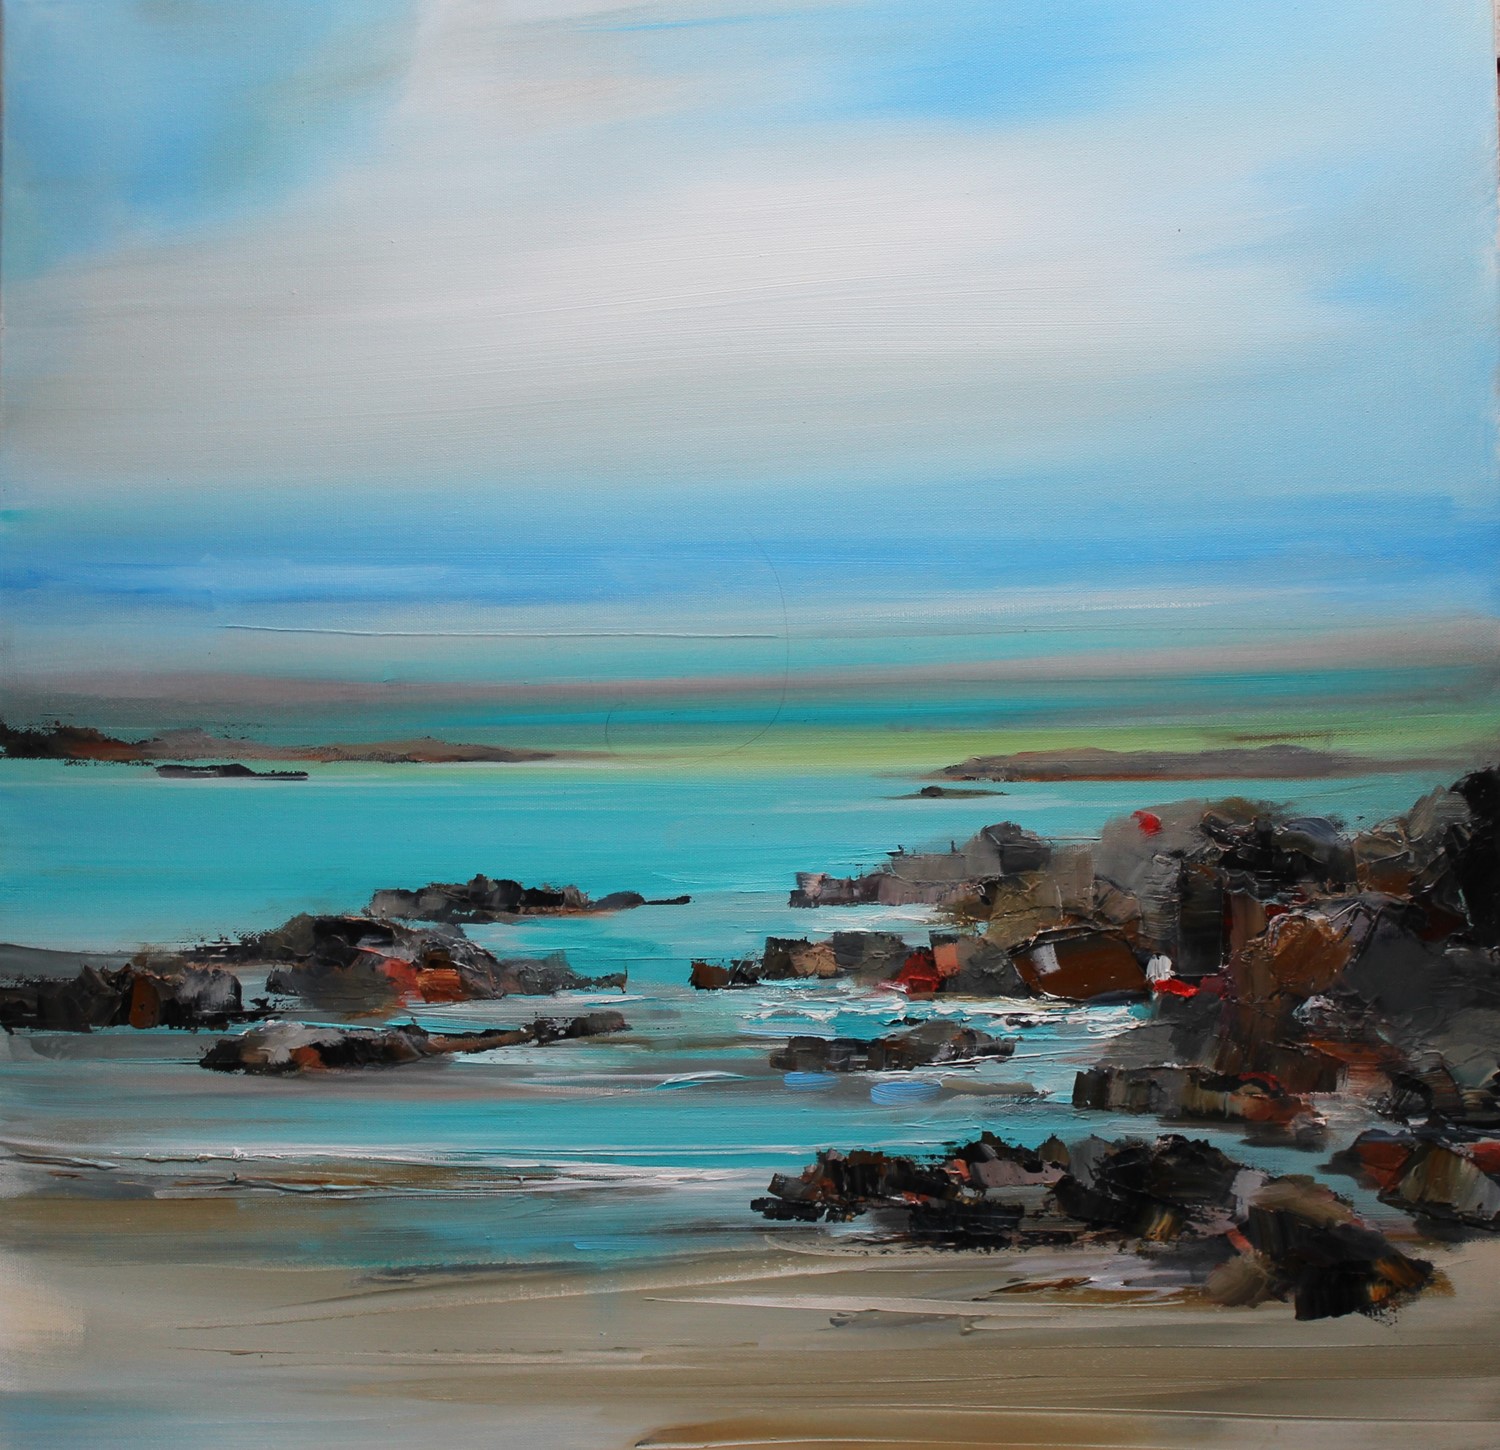 'Turquoise Ocean' by artist Rosanne Barr